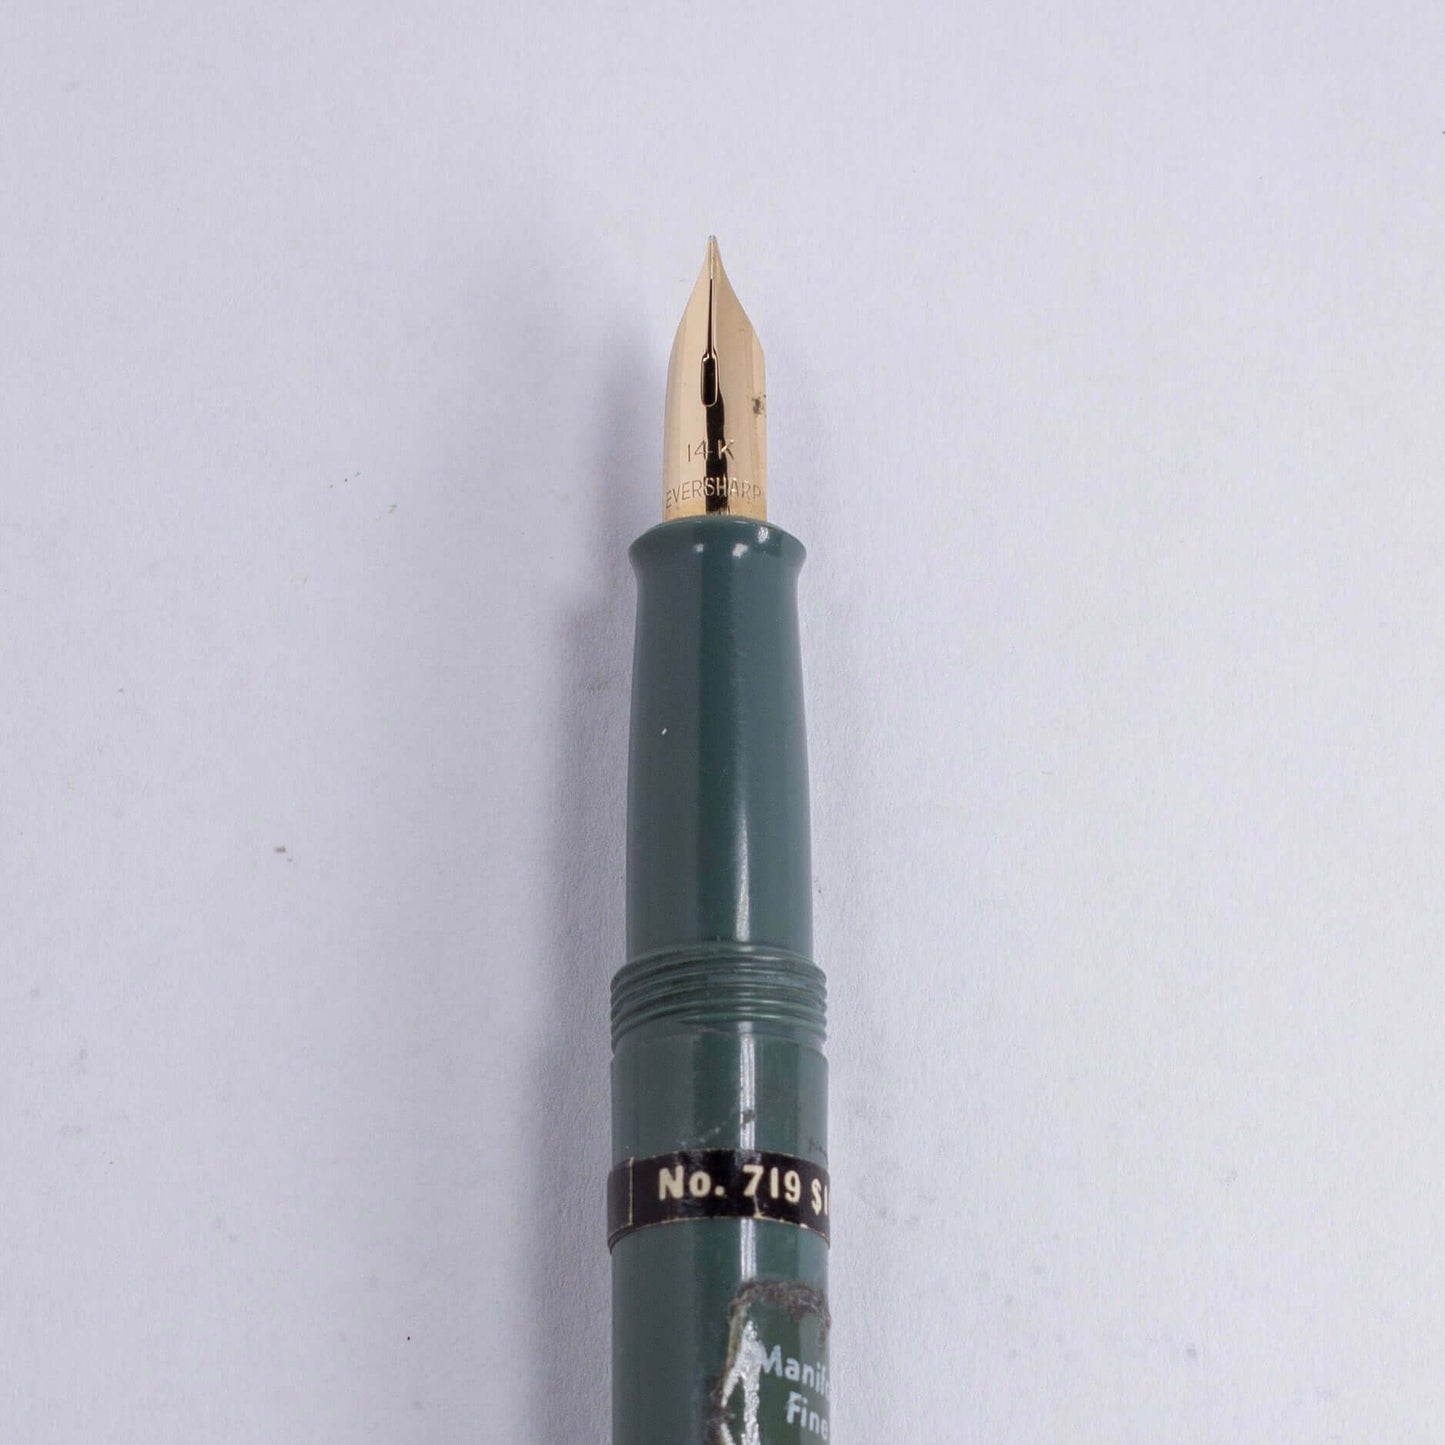 Eversharp Slim Ventura Fountain Pen/Pencil Set, Gray with Sterling Silver Caps